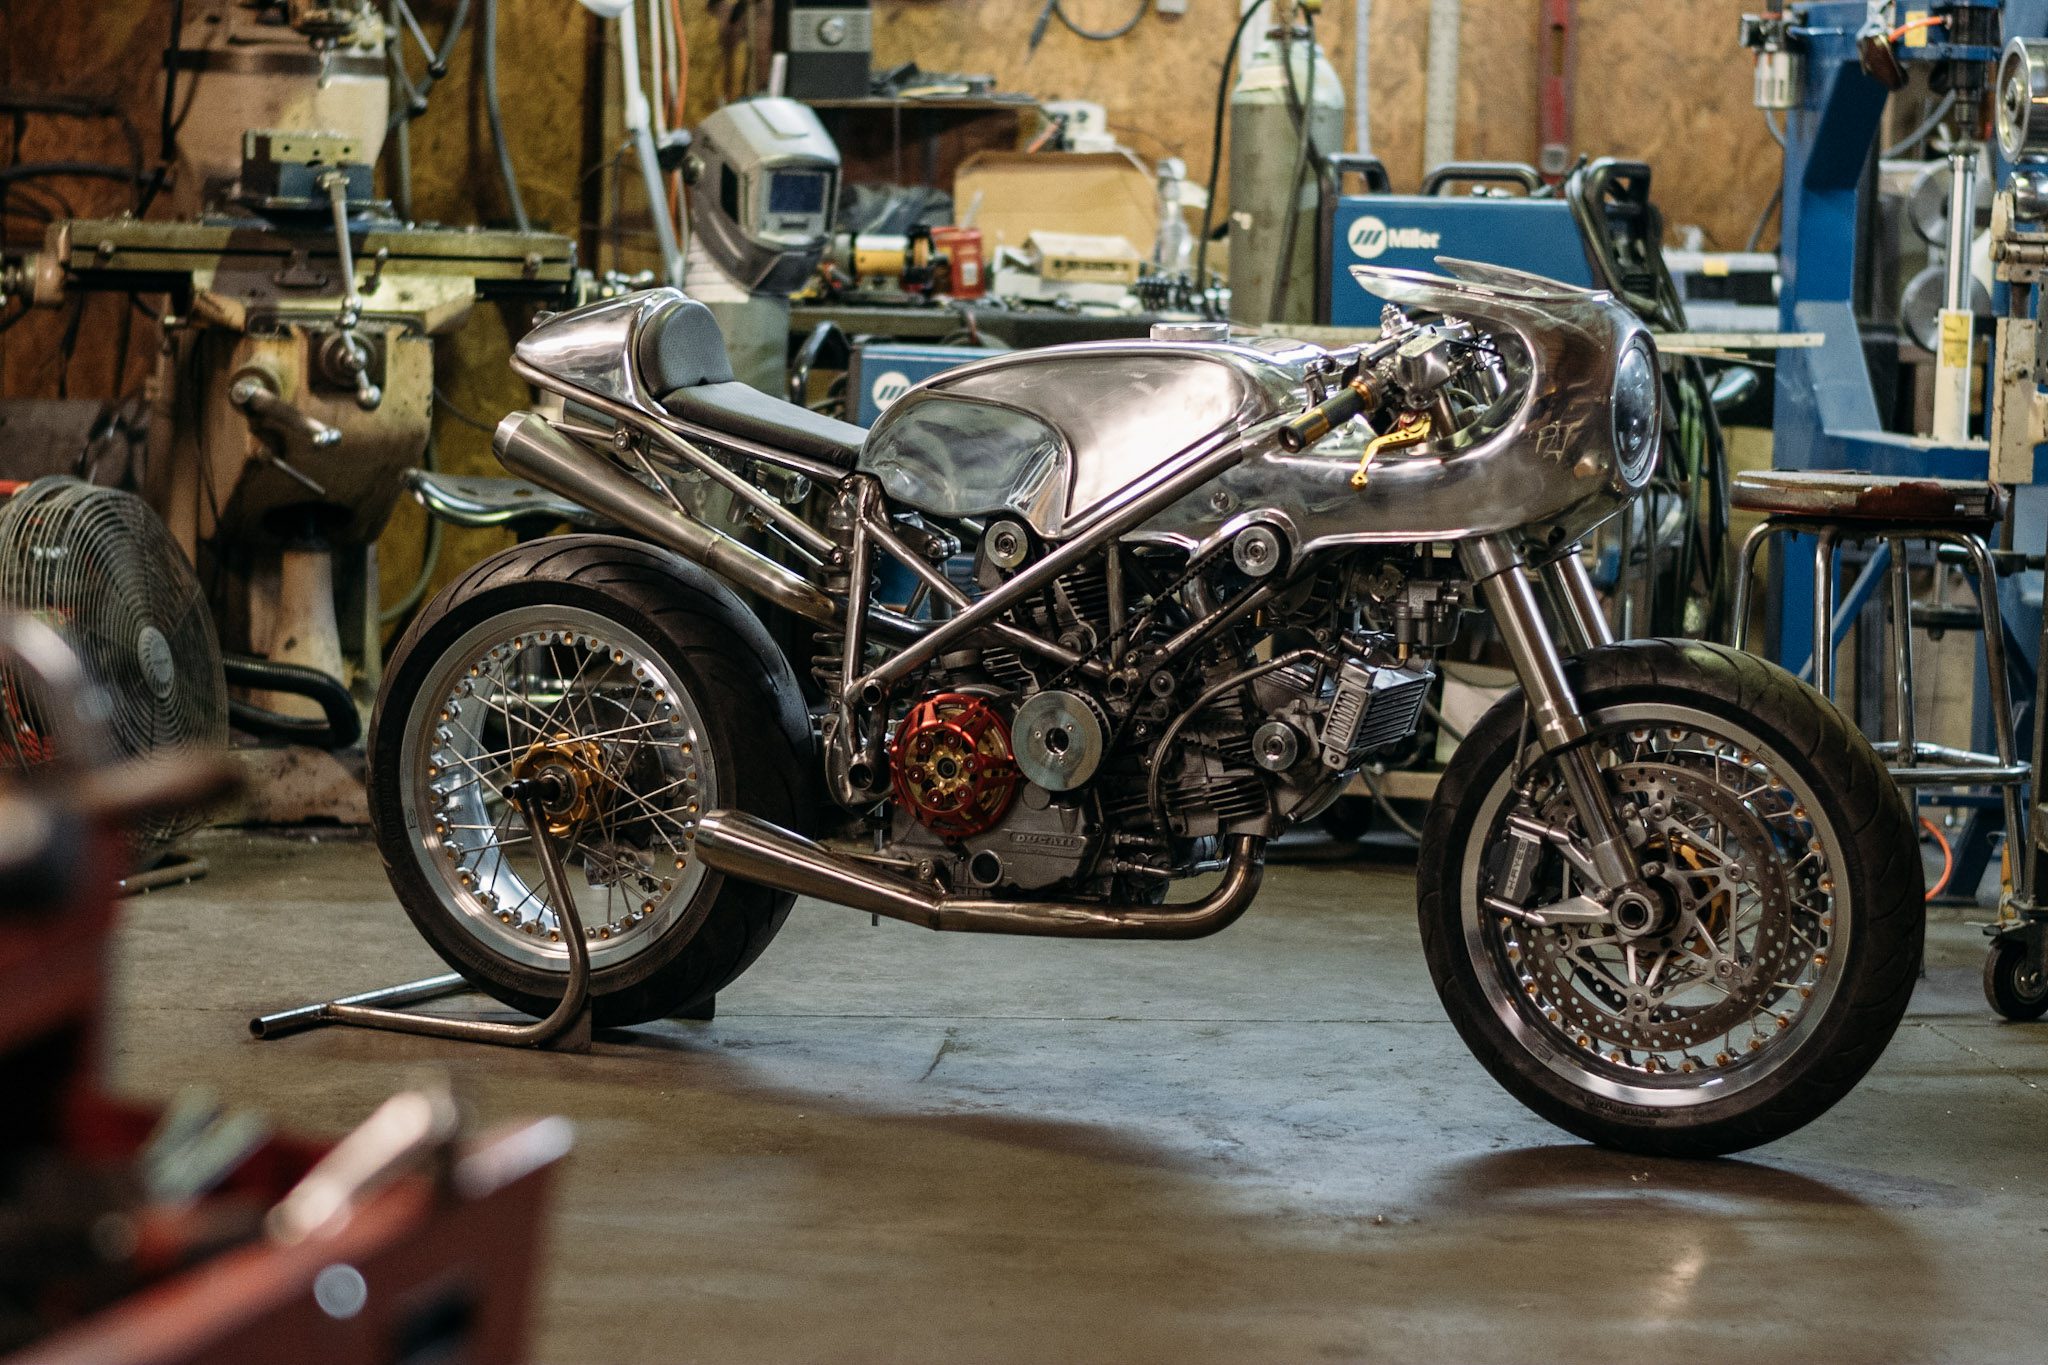 craig Rodsmith's custom supercharged Ducati